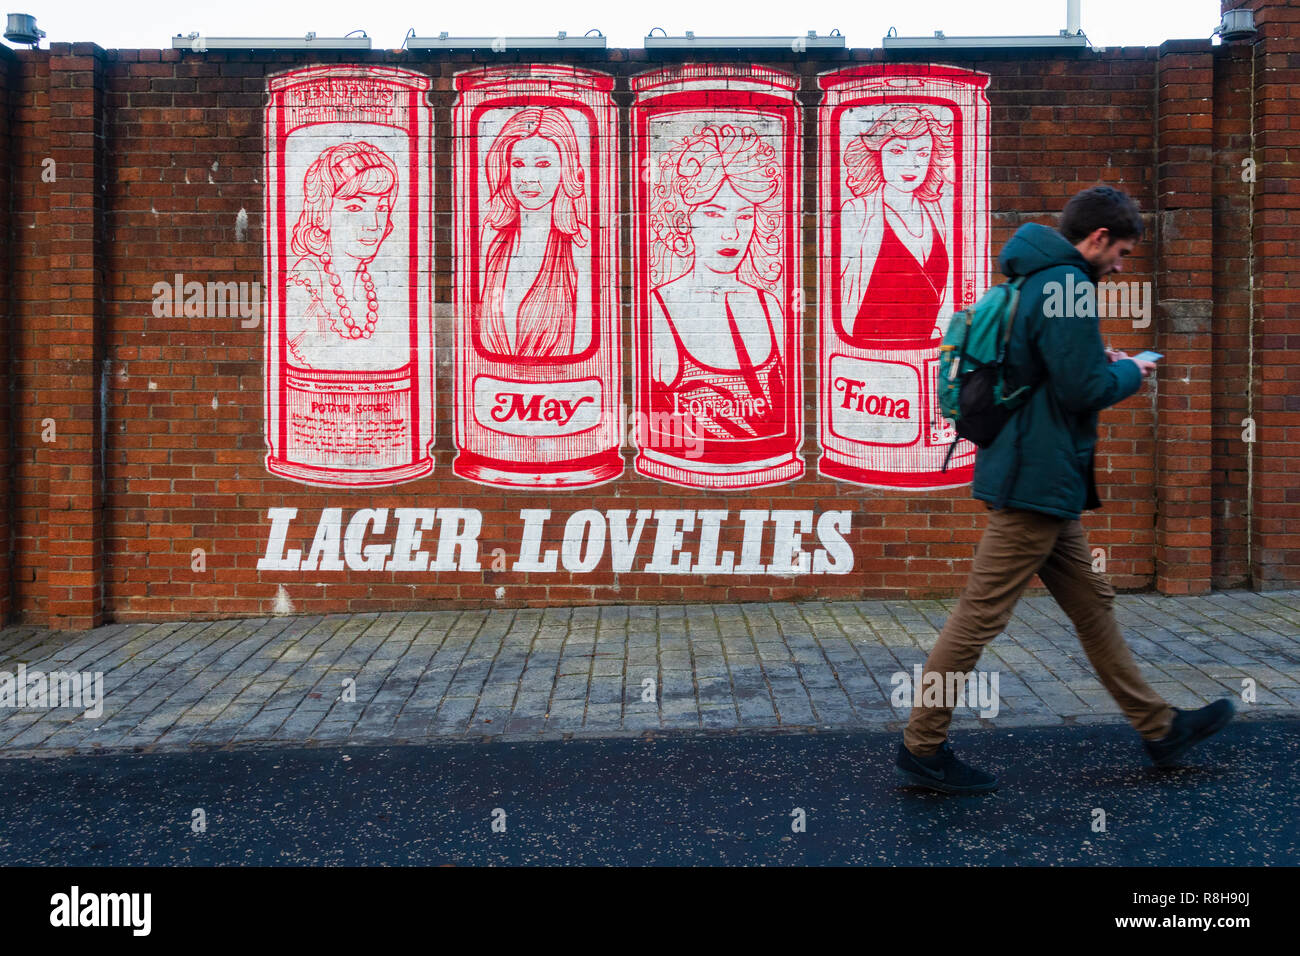 Tennent's Lagerbier Wandbild mit LagerLovelies auf Wand an Tennent Caledonian Brauereien Wellpark Brauerei in Glasgow, Schottland, Großbritannien lackiert Stockfoto